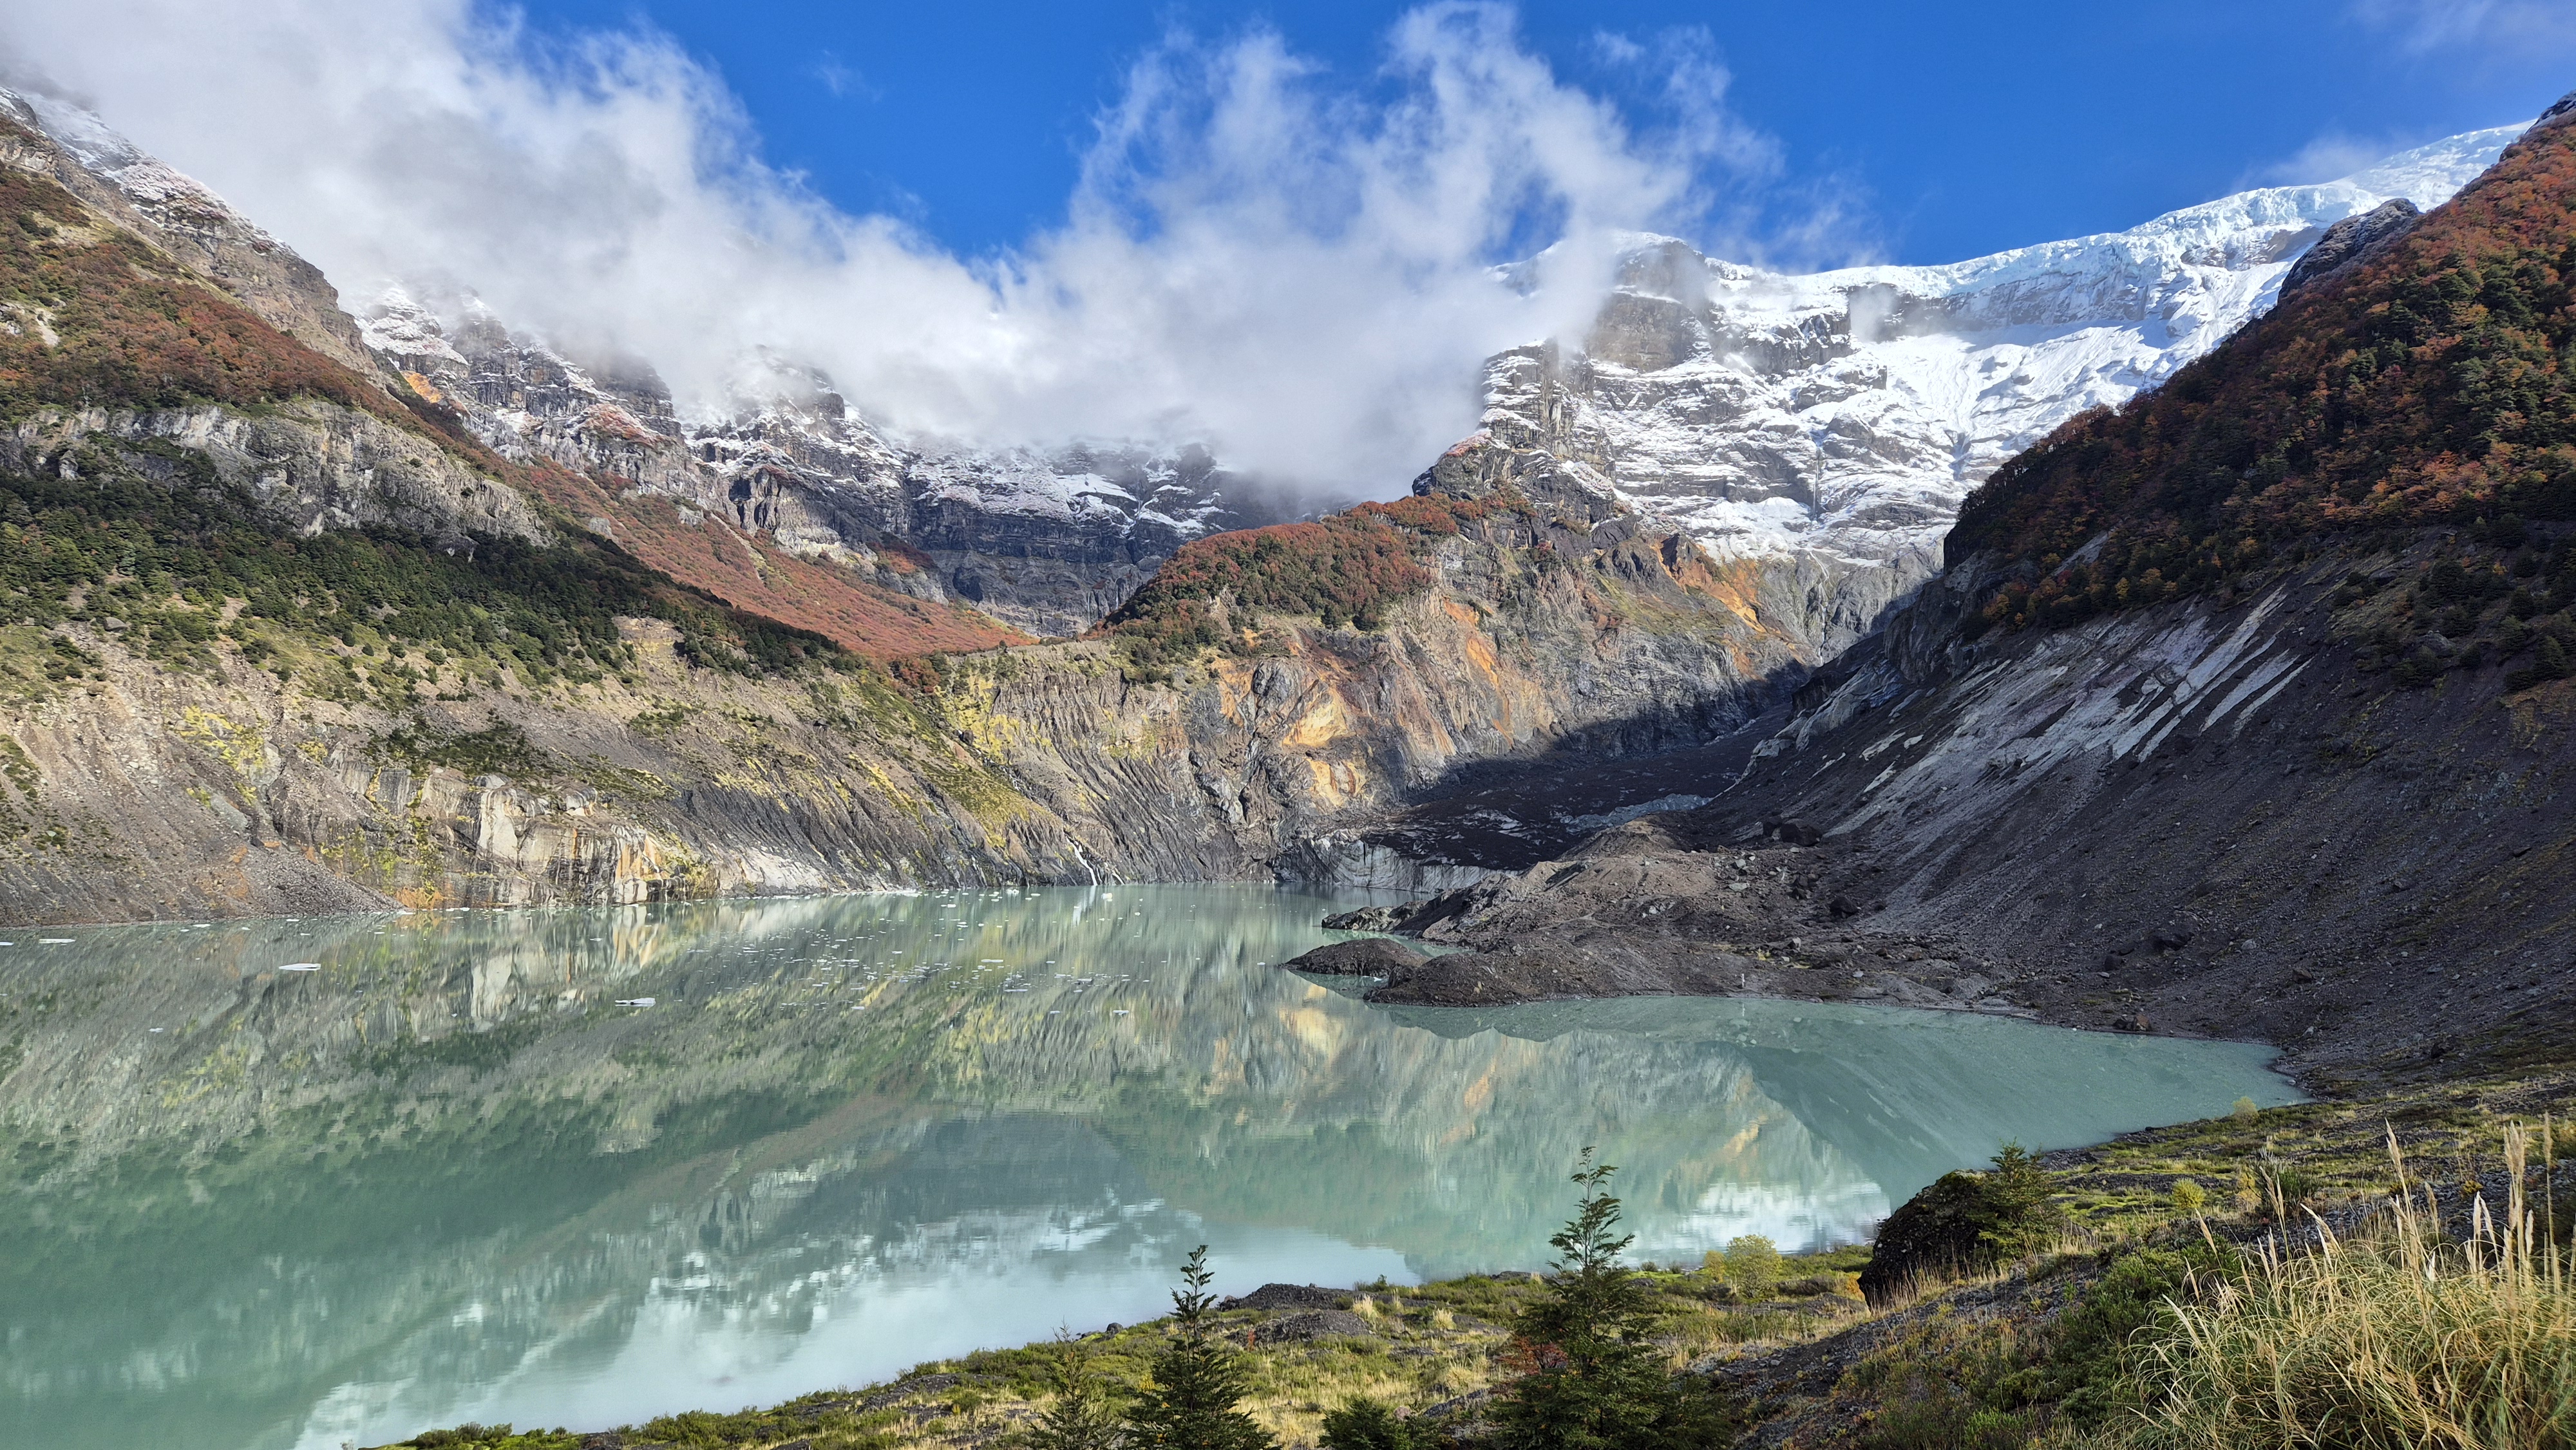 Патагония - самое красивое место на земле. 2 недели по Чили и Аргентине.  Осенние пейзажи  04/24